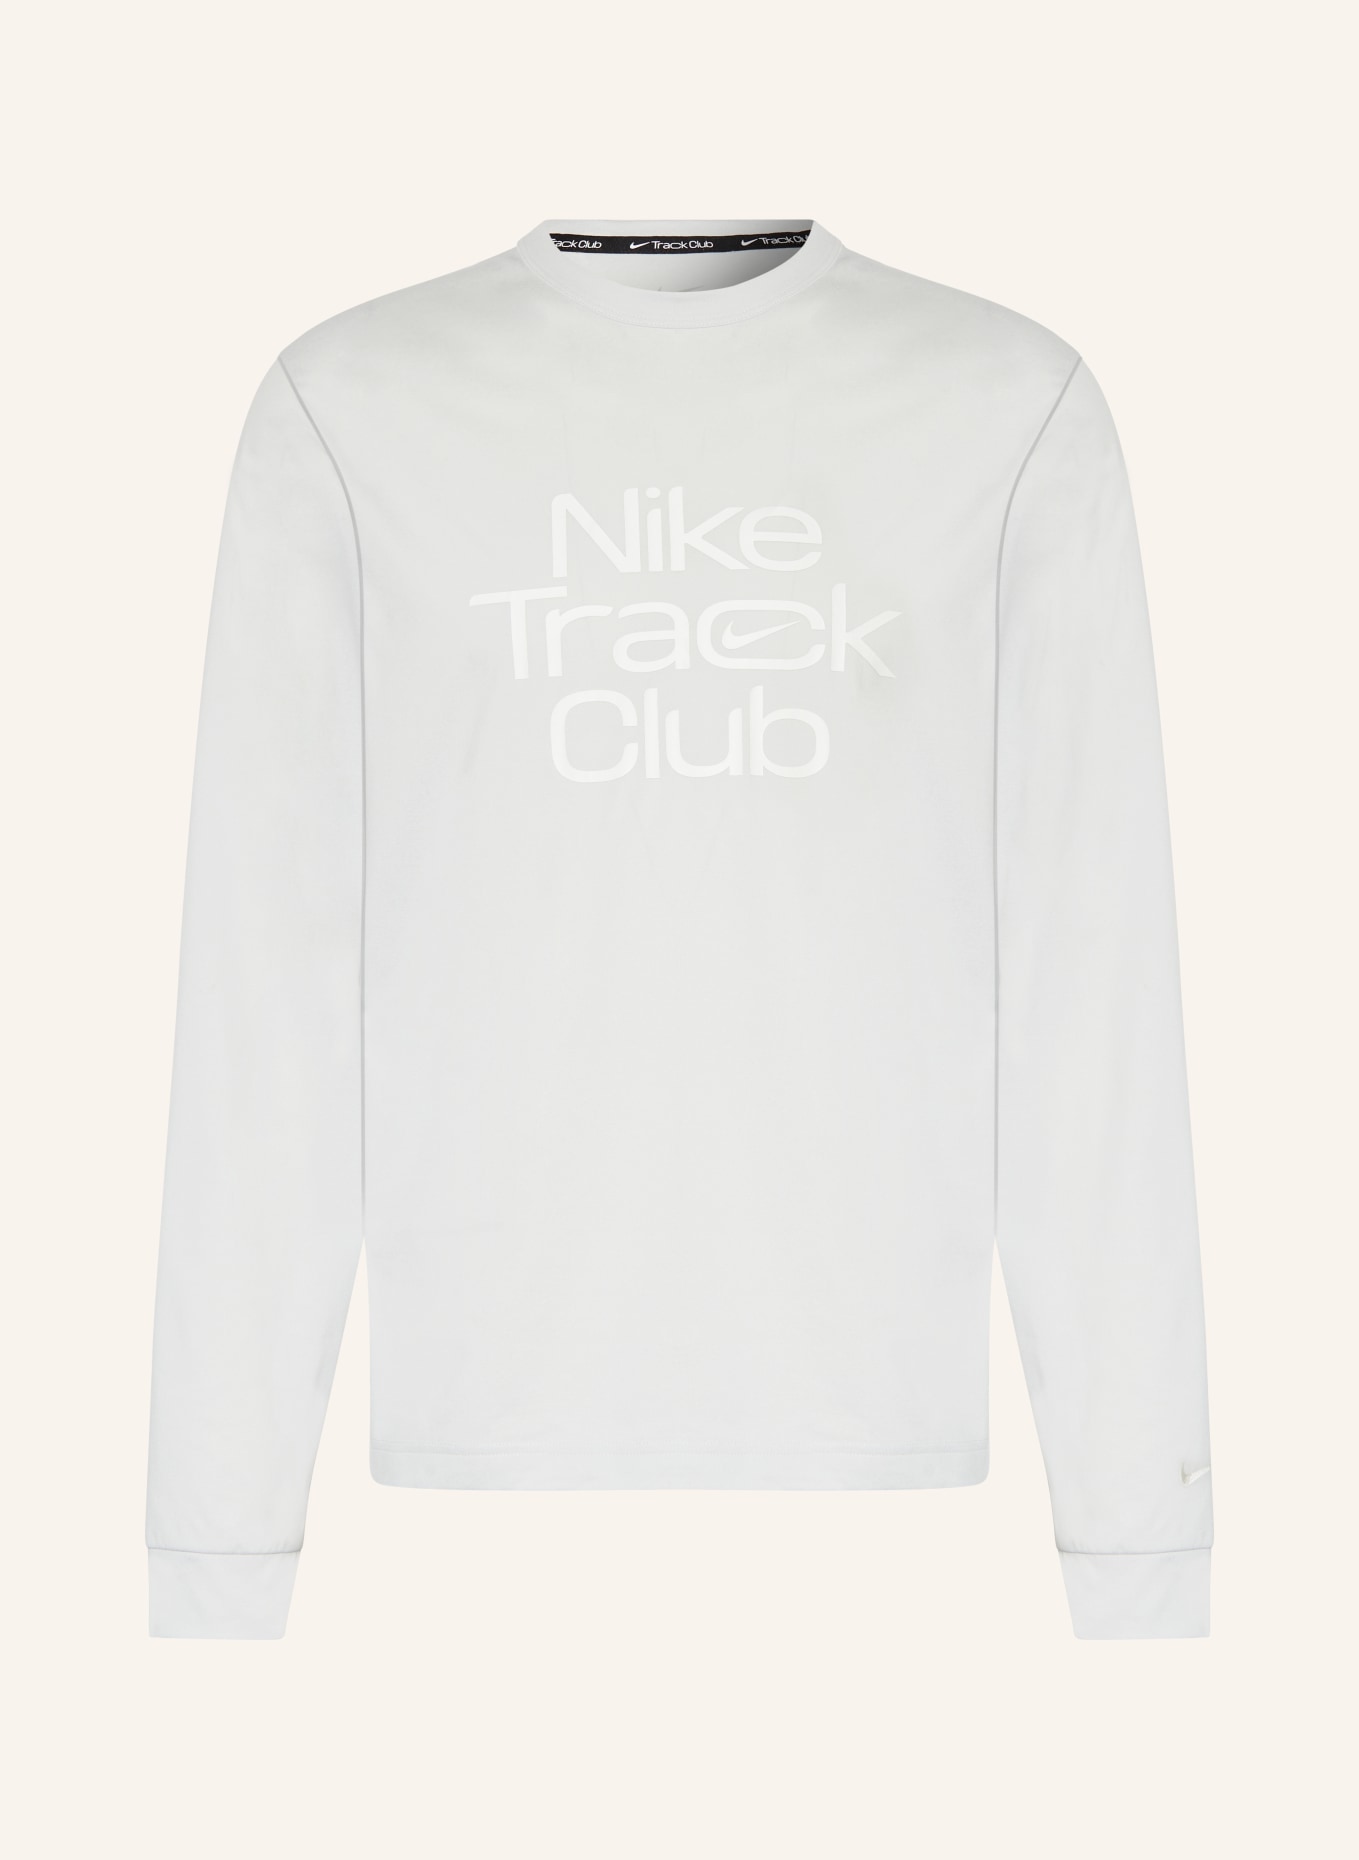 Nike Laufshirt TRACK CLUB, Farbe: HELLGRAU/ WEISS (Bild 1)